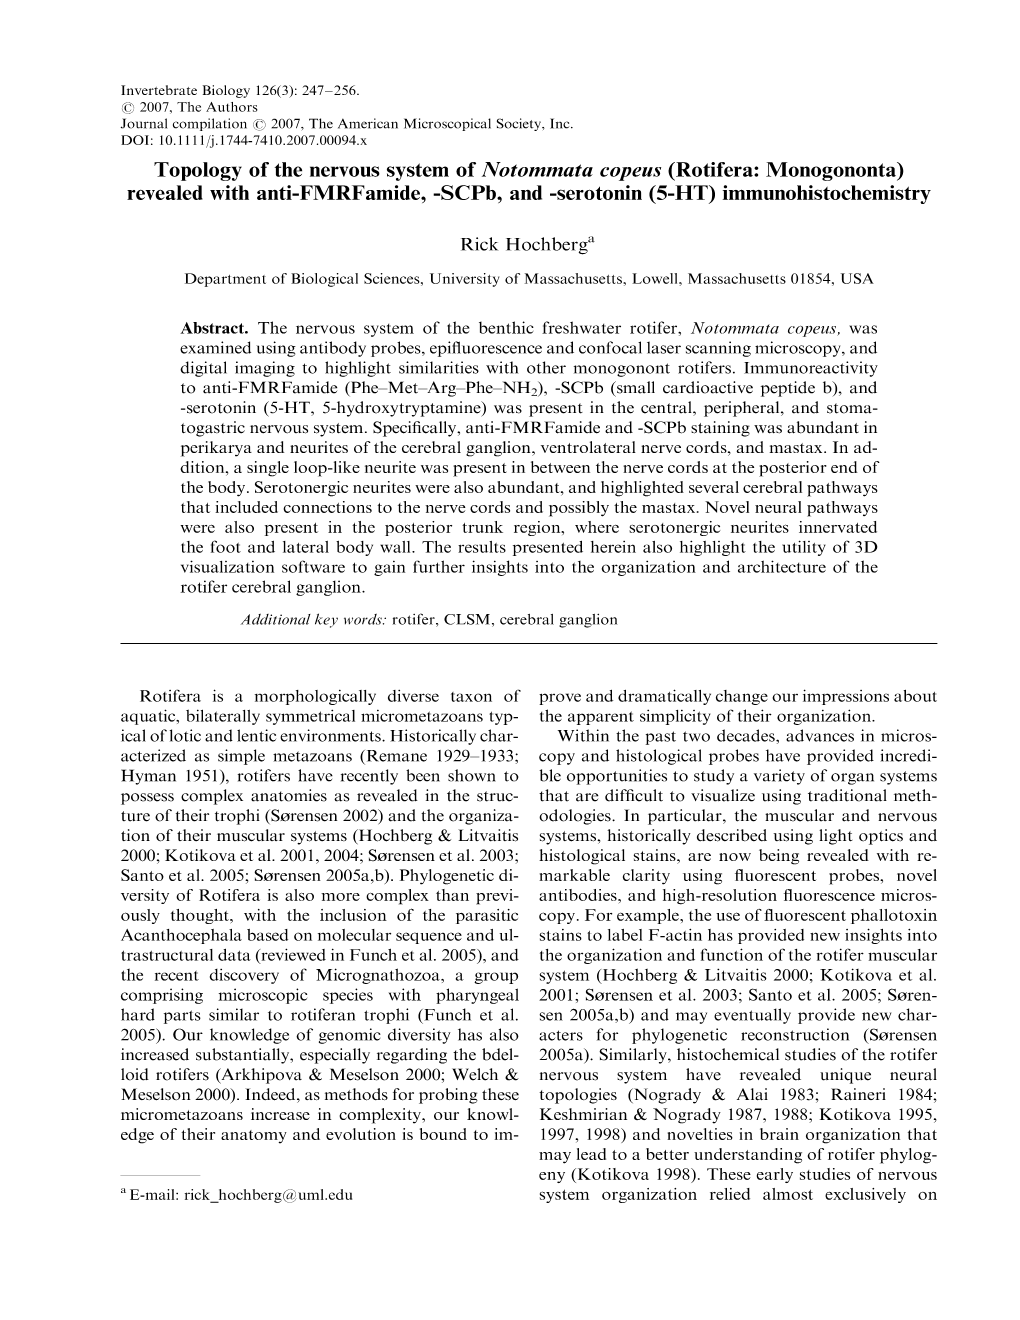 Topology of the Nervous System of Notommata Copeus (Rotifera: Monogononta) Revealed with Anti-Fmrfamide, -Scpb, and -Serotonin (5-HT) Immunohistochemistry